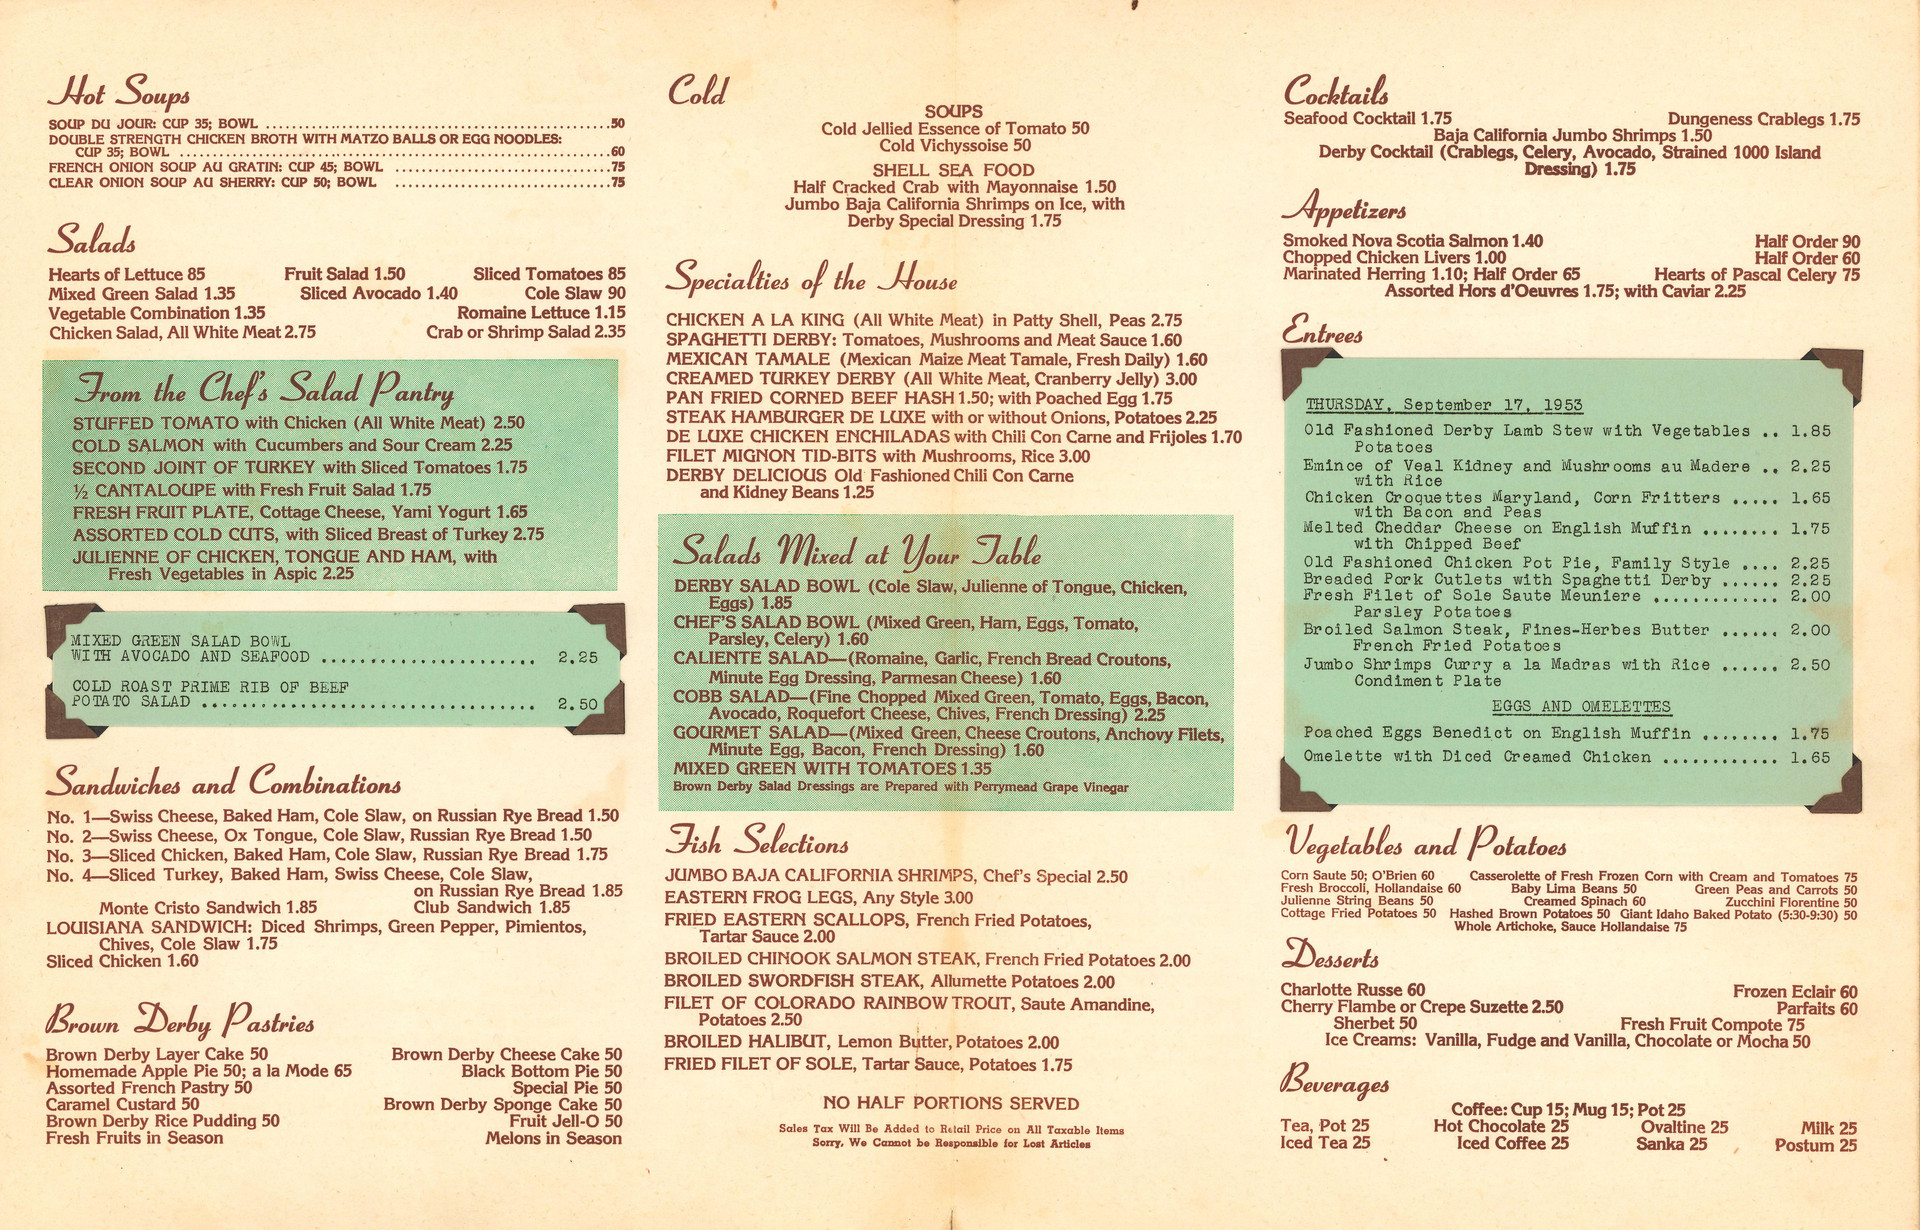 A Brown Derby menu from September 1953.